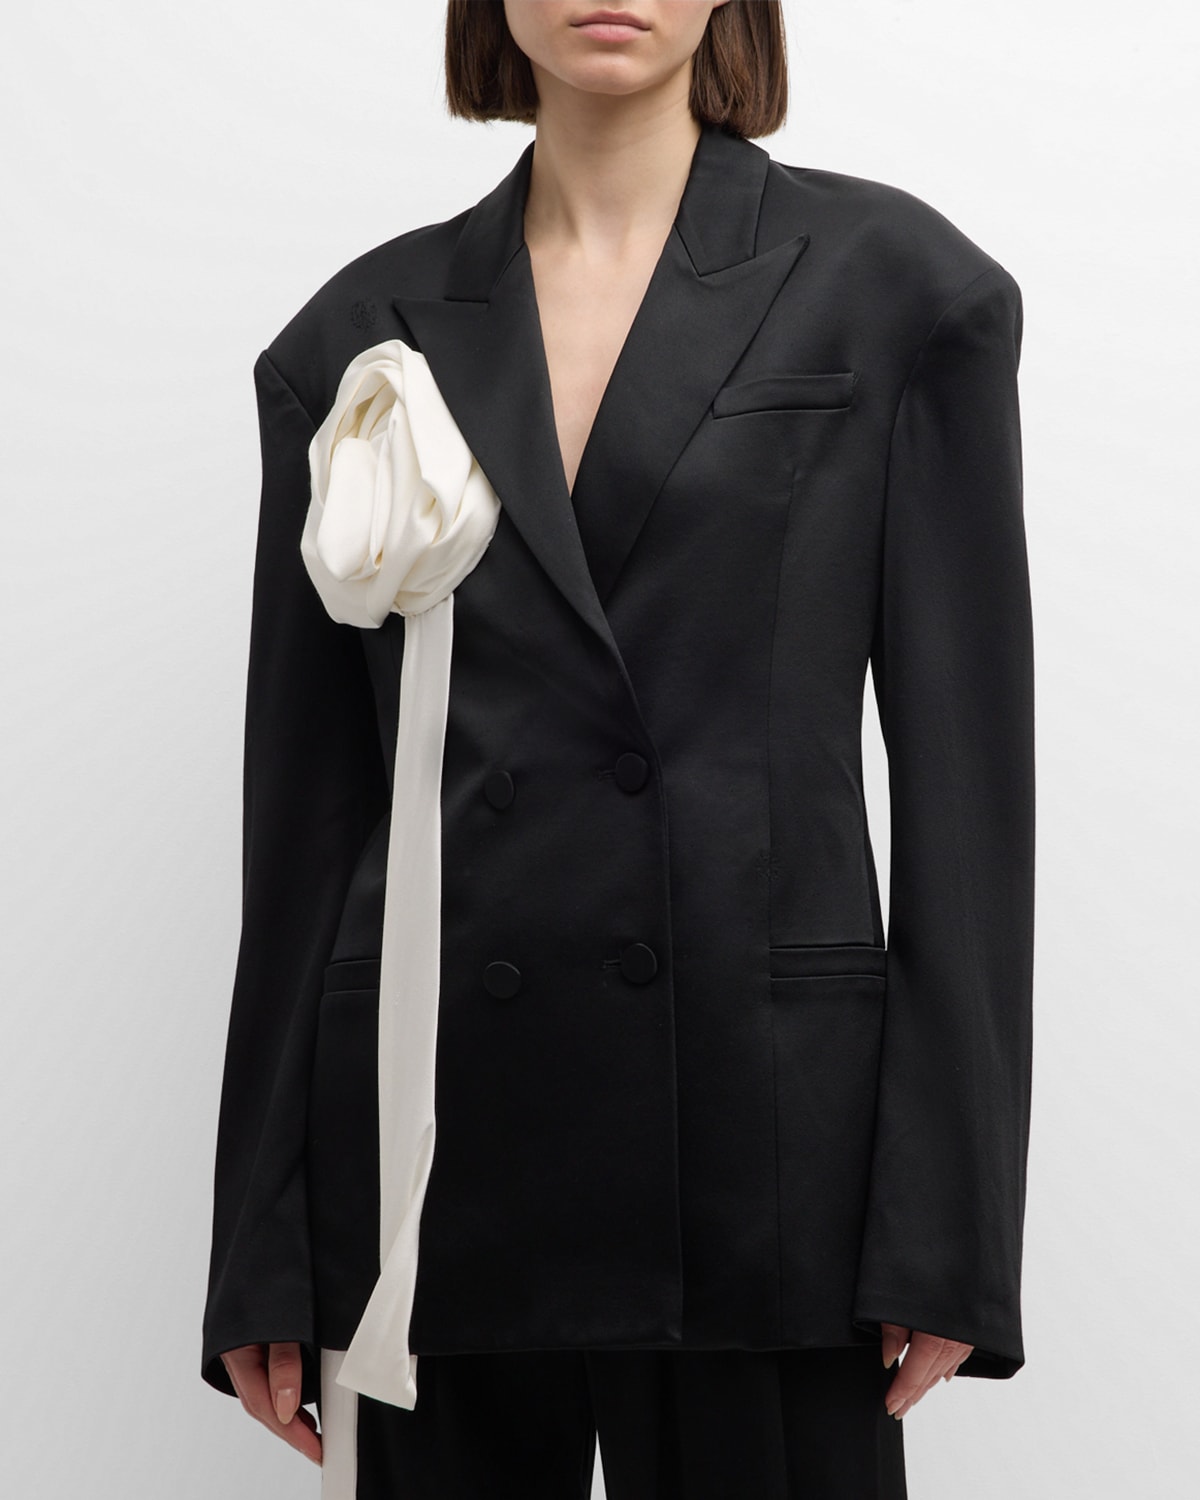 Daniel Corsage Double-Breasted Blazer Jacket